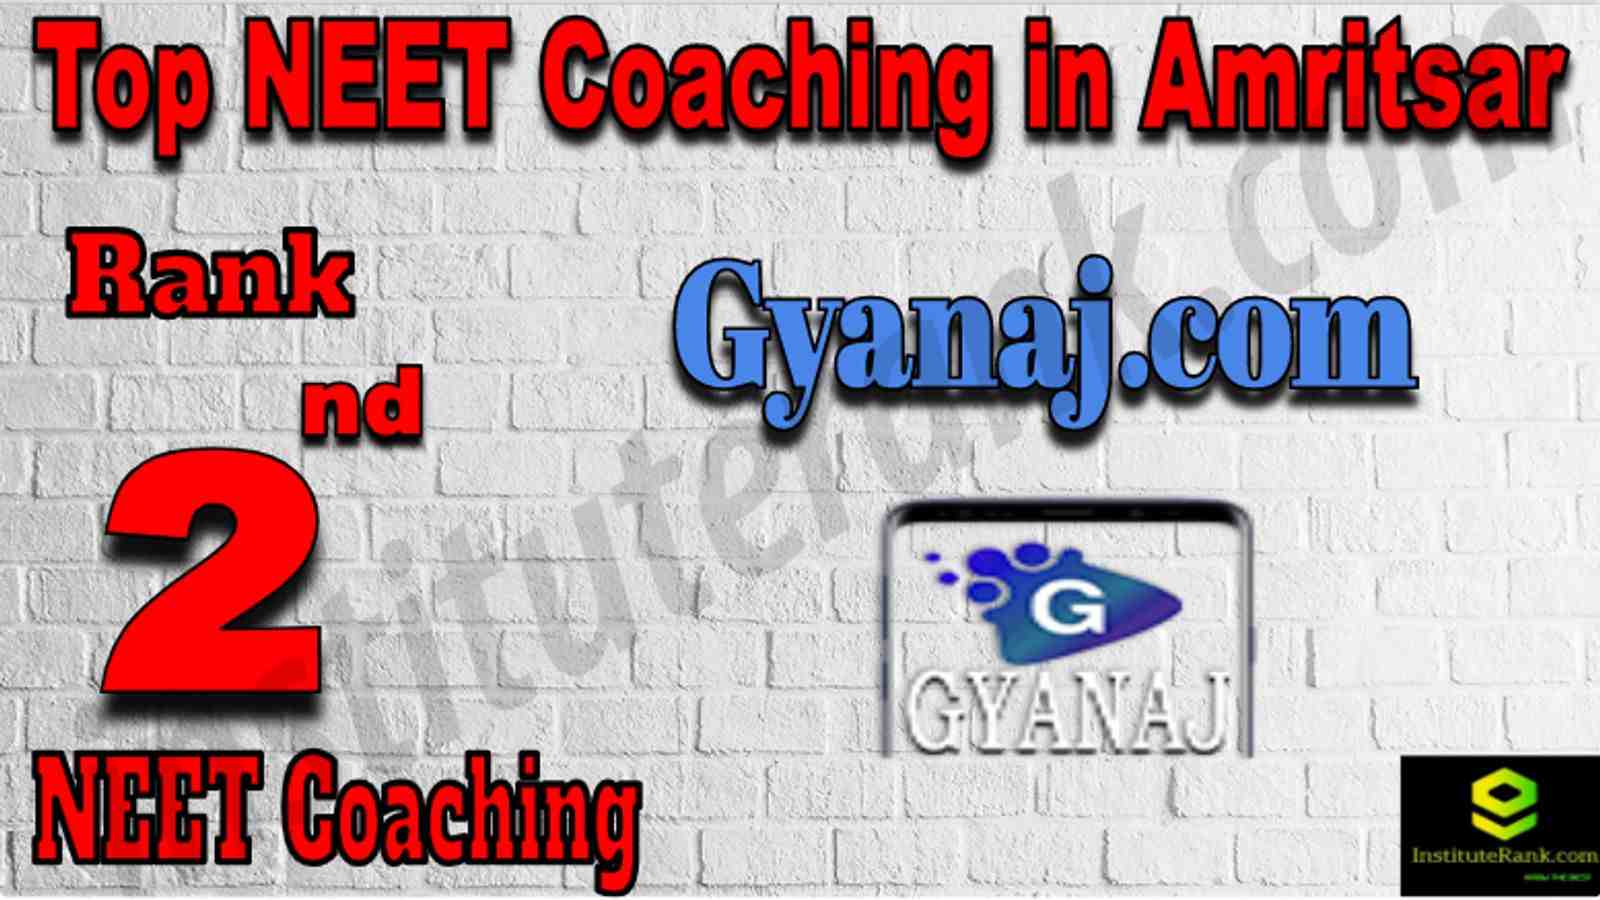 Rank 2 Top NEET Coaching in Amritsar